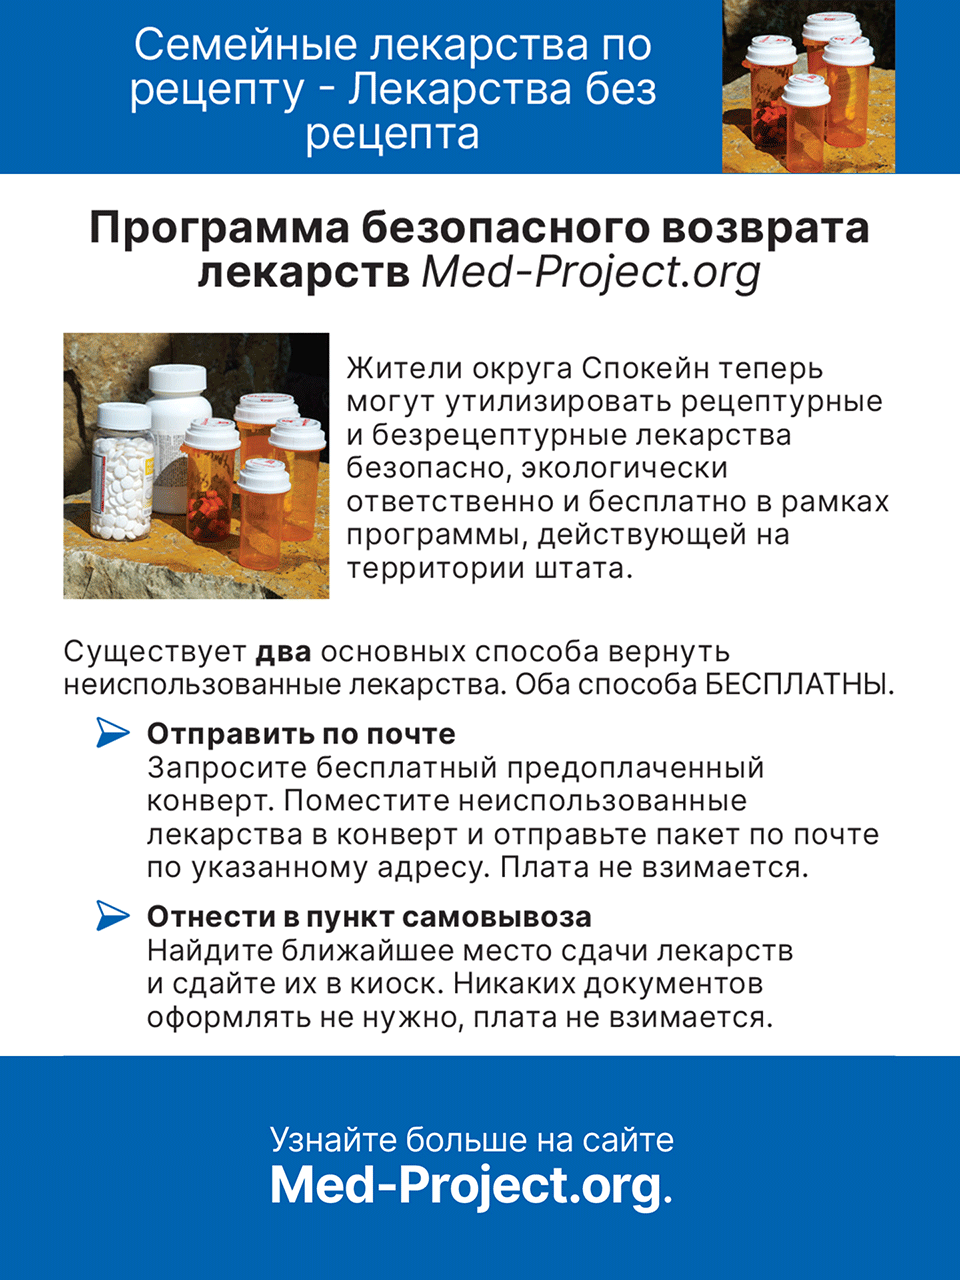 Medication Disposal Handout - Russian